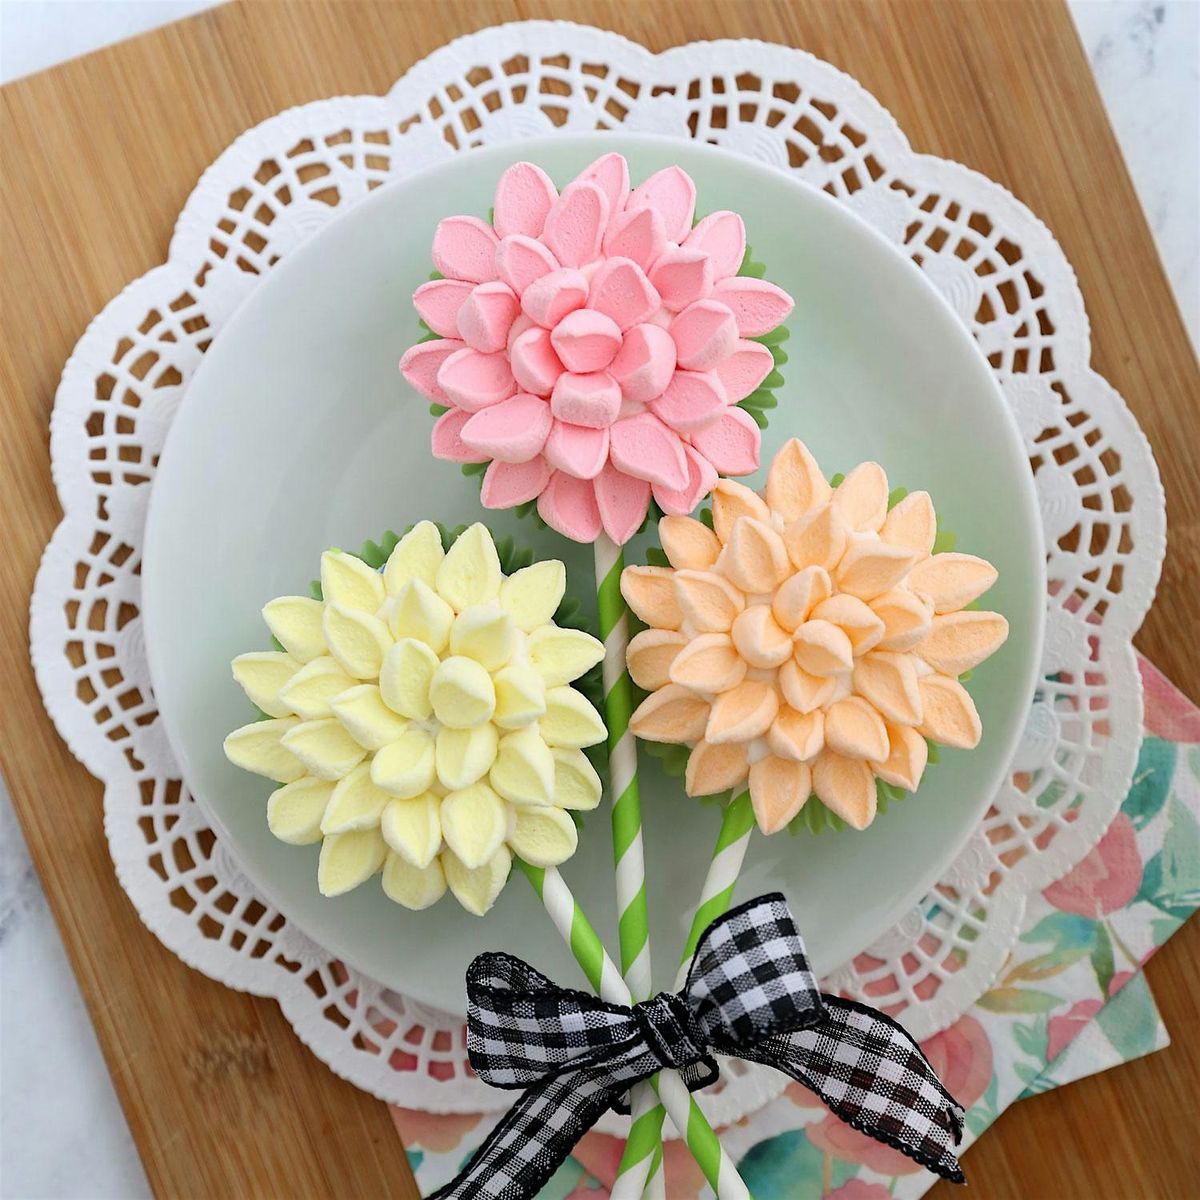 \u201cMy Mini & Me\u201d  Marshmallow Bouquet Cupcake Decorating!